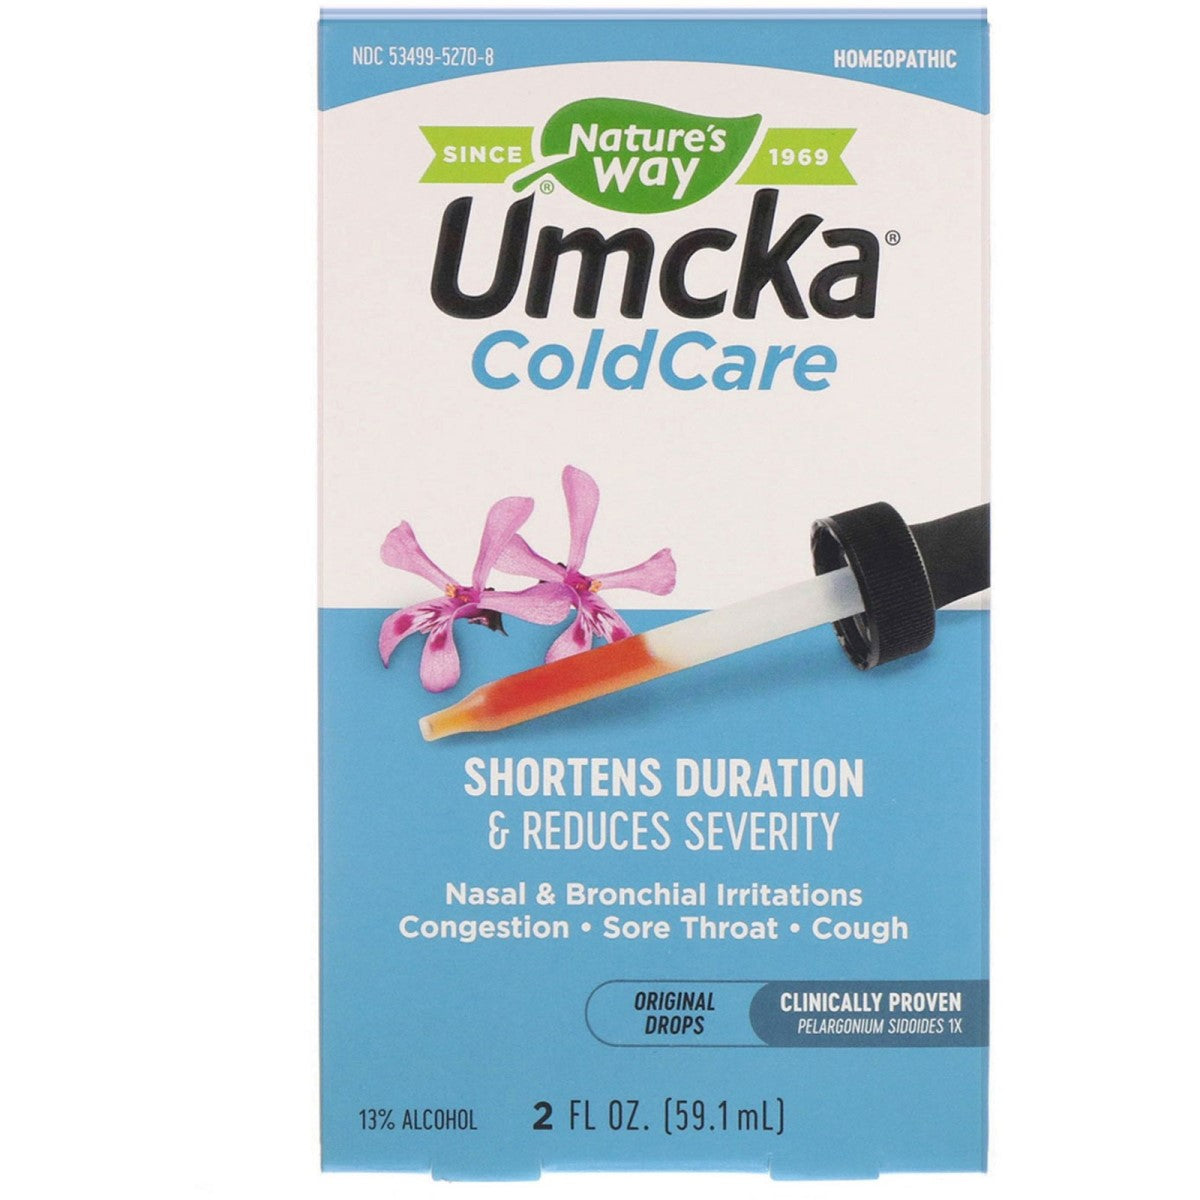 Primary image of Umcka Coldcare Original Drops